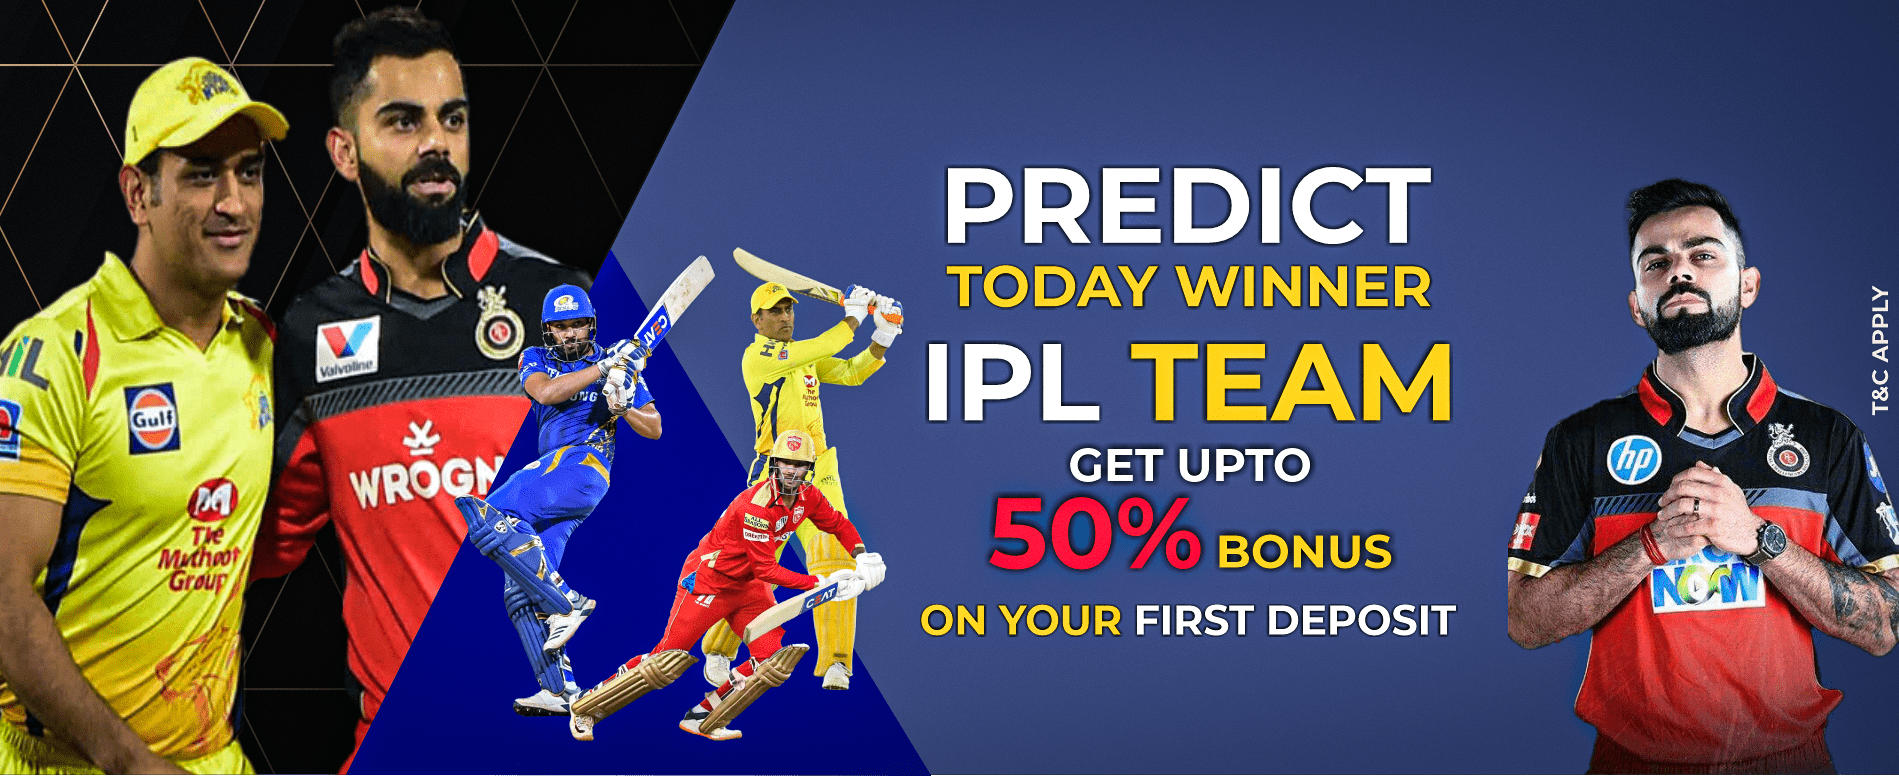 Predict IPL WInner team